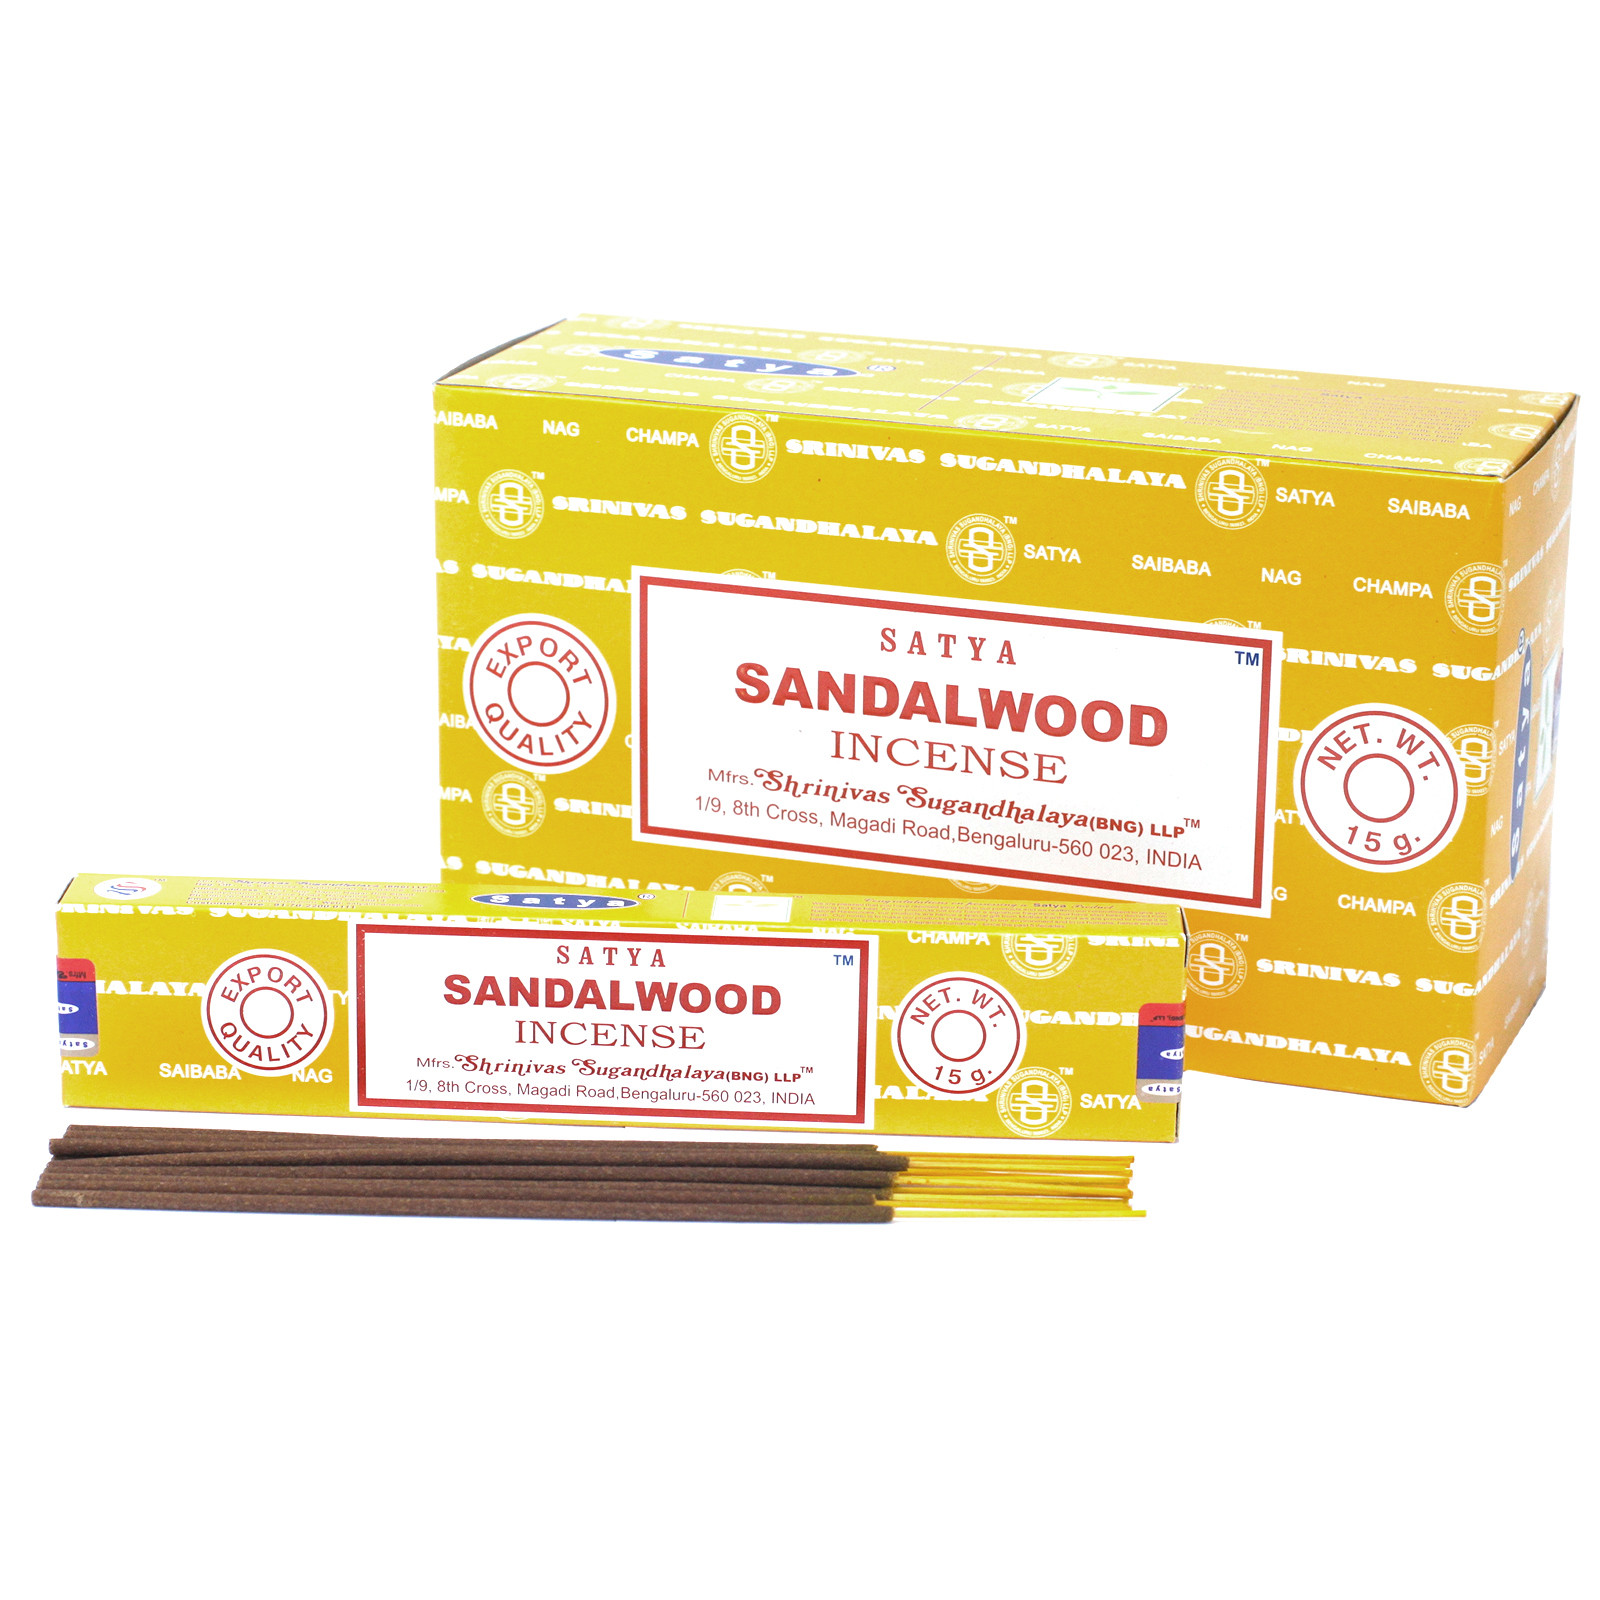 3 x 15g Packs Satya Incense Sticks - Sandalwood